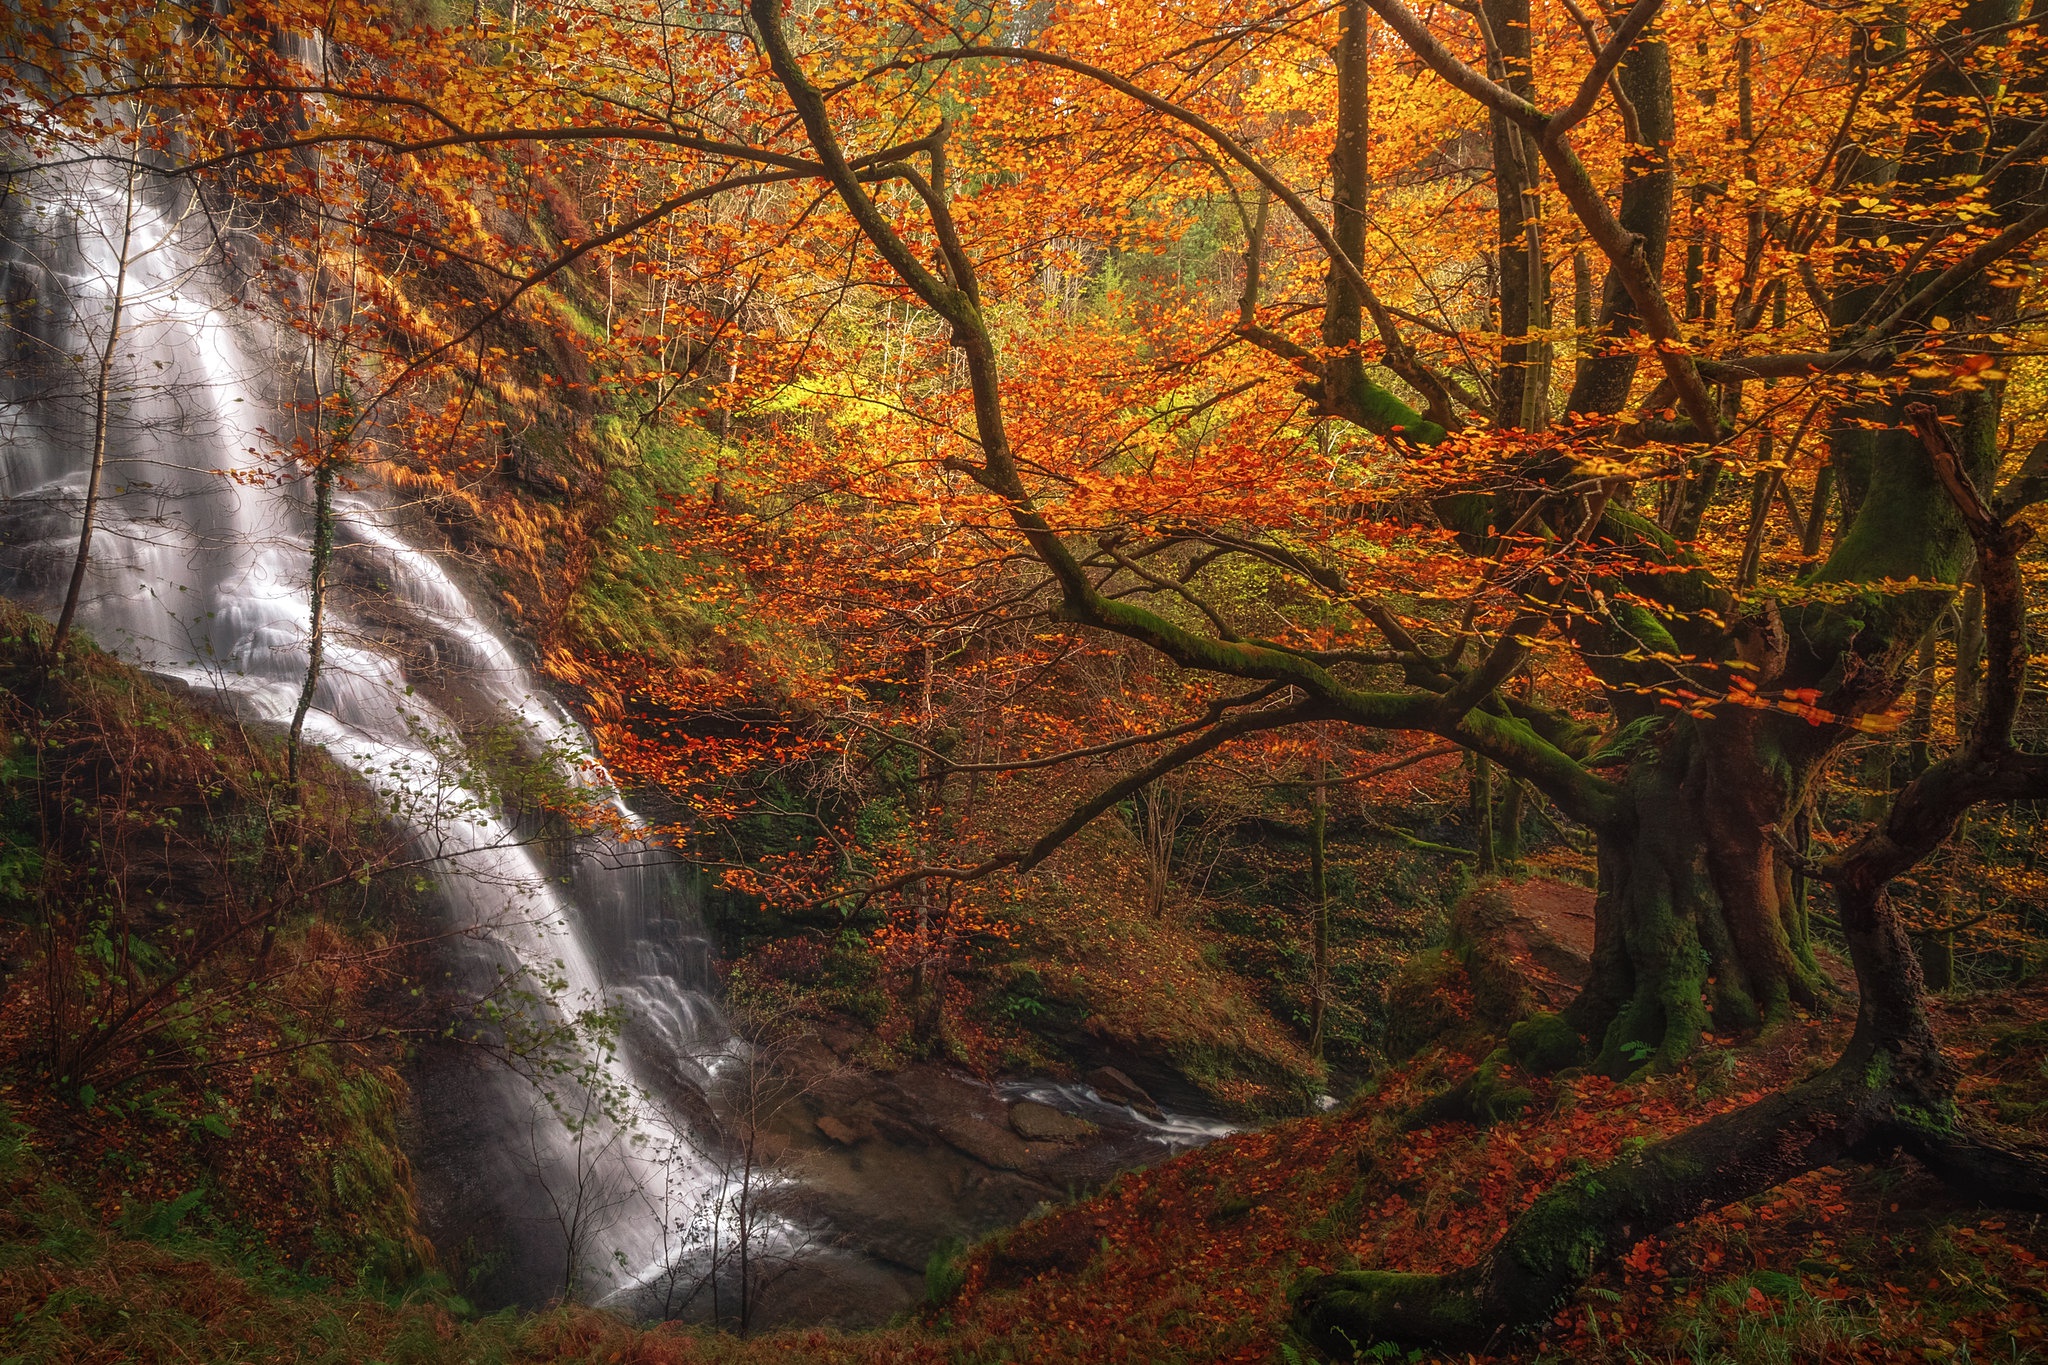 Descarga gratis la imagen Otoño, Cascadas, Cascada, Bosque, Árbol, España, Tierra/naturaleza en el escritorio de tu PC